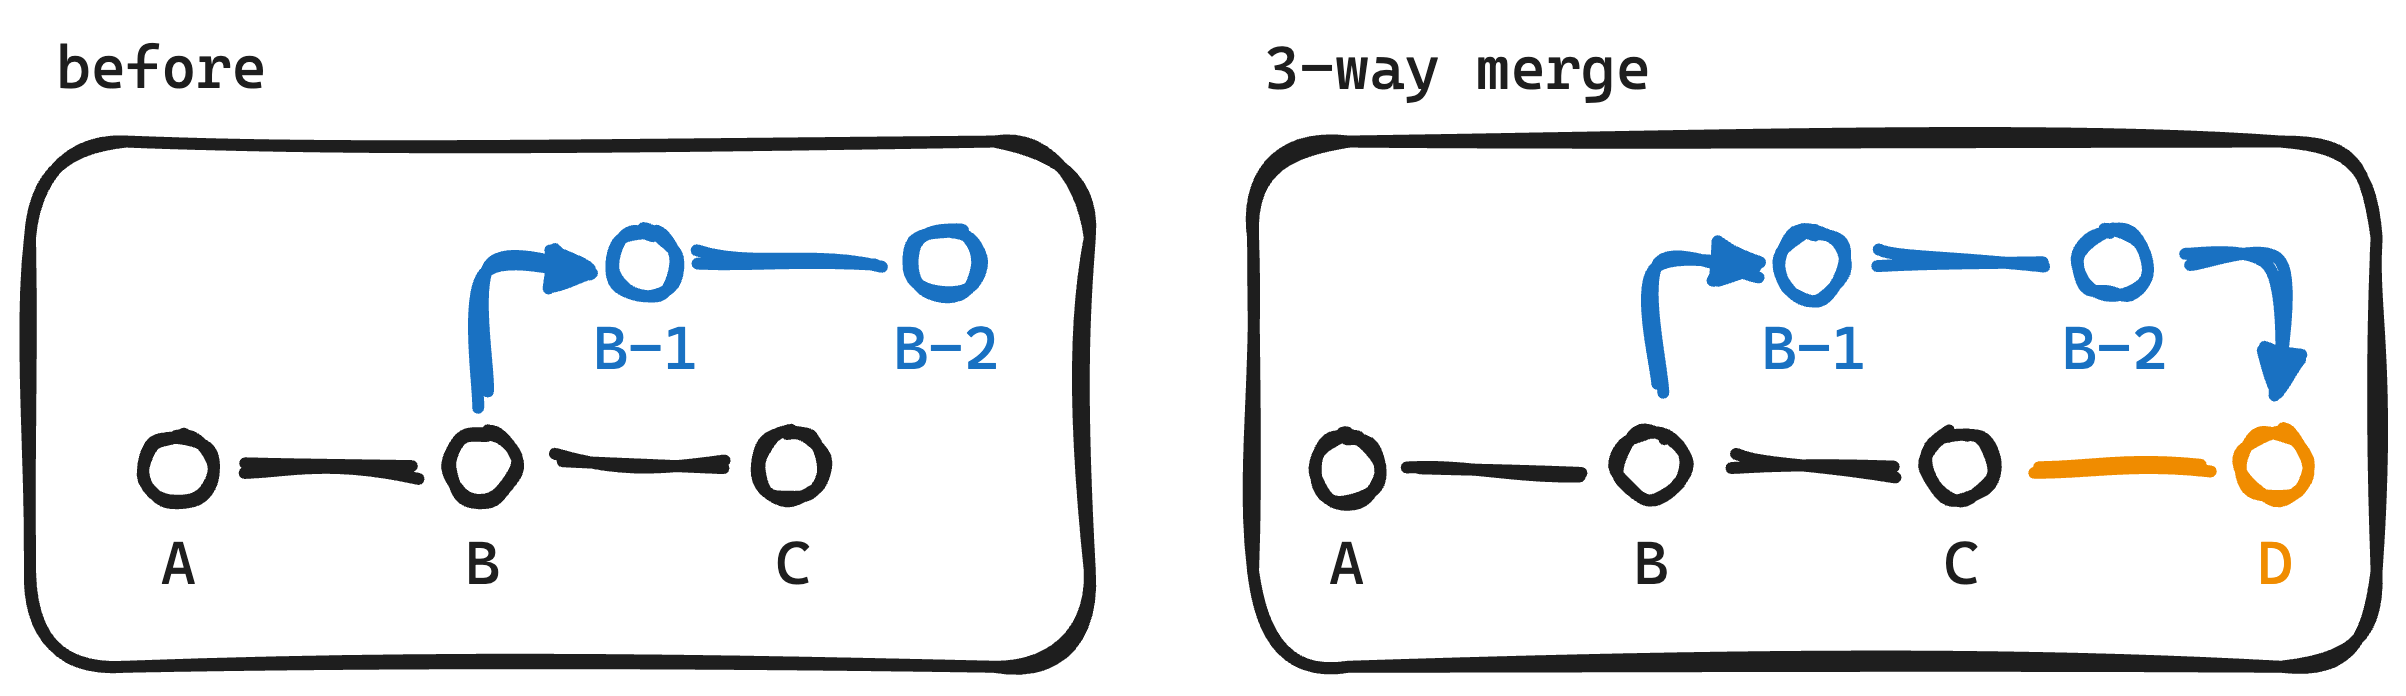 3-way merge 동작 방식